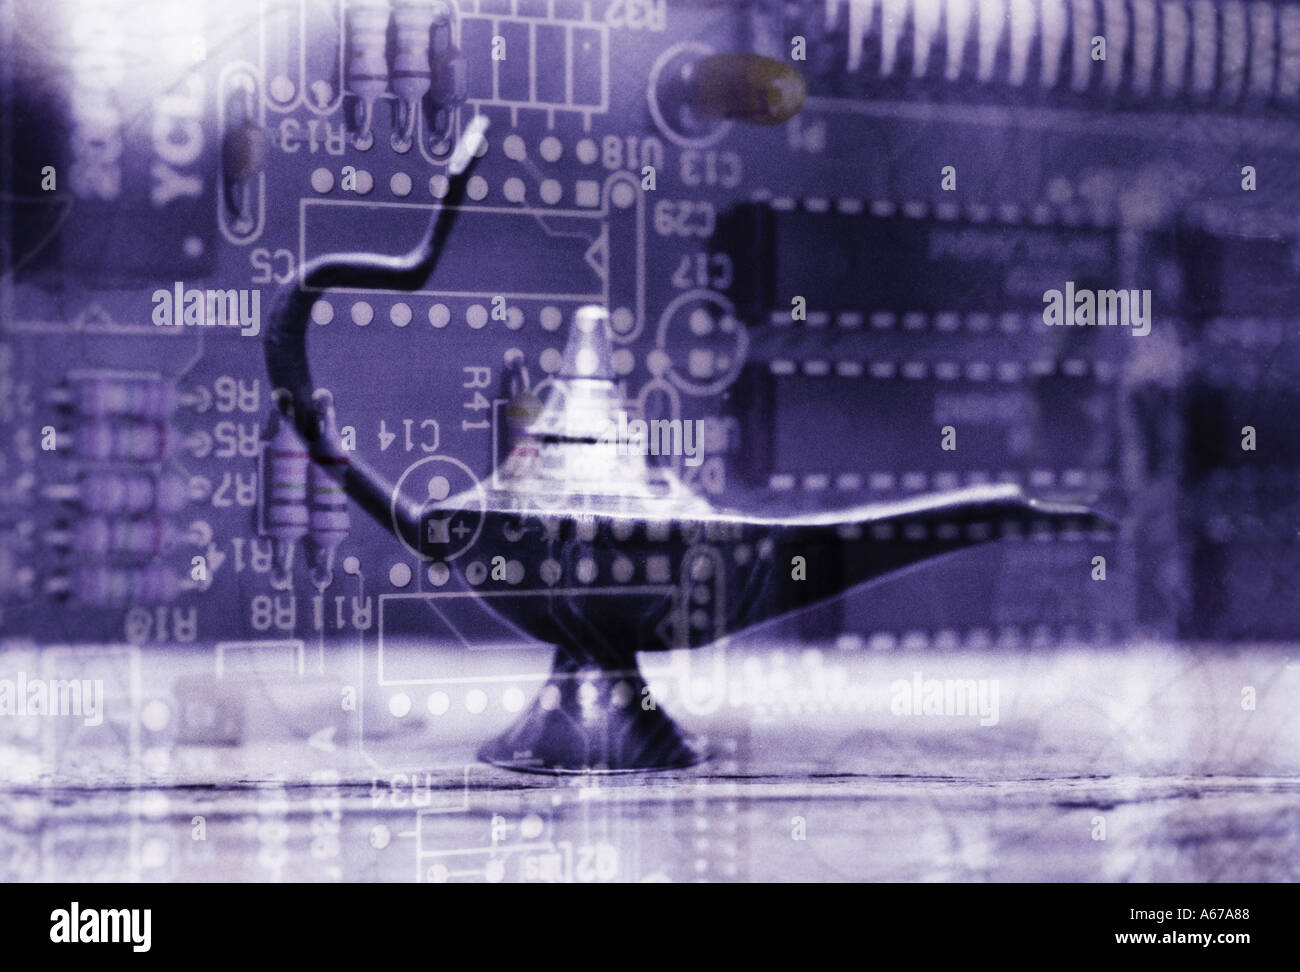 Glück Aladdin Lampe Stil illustriert, Glück und viel Glück, "Computer-Algorithmen" Konzept Stockfoto